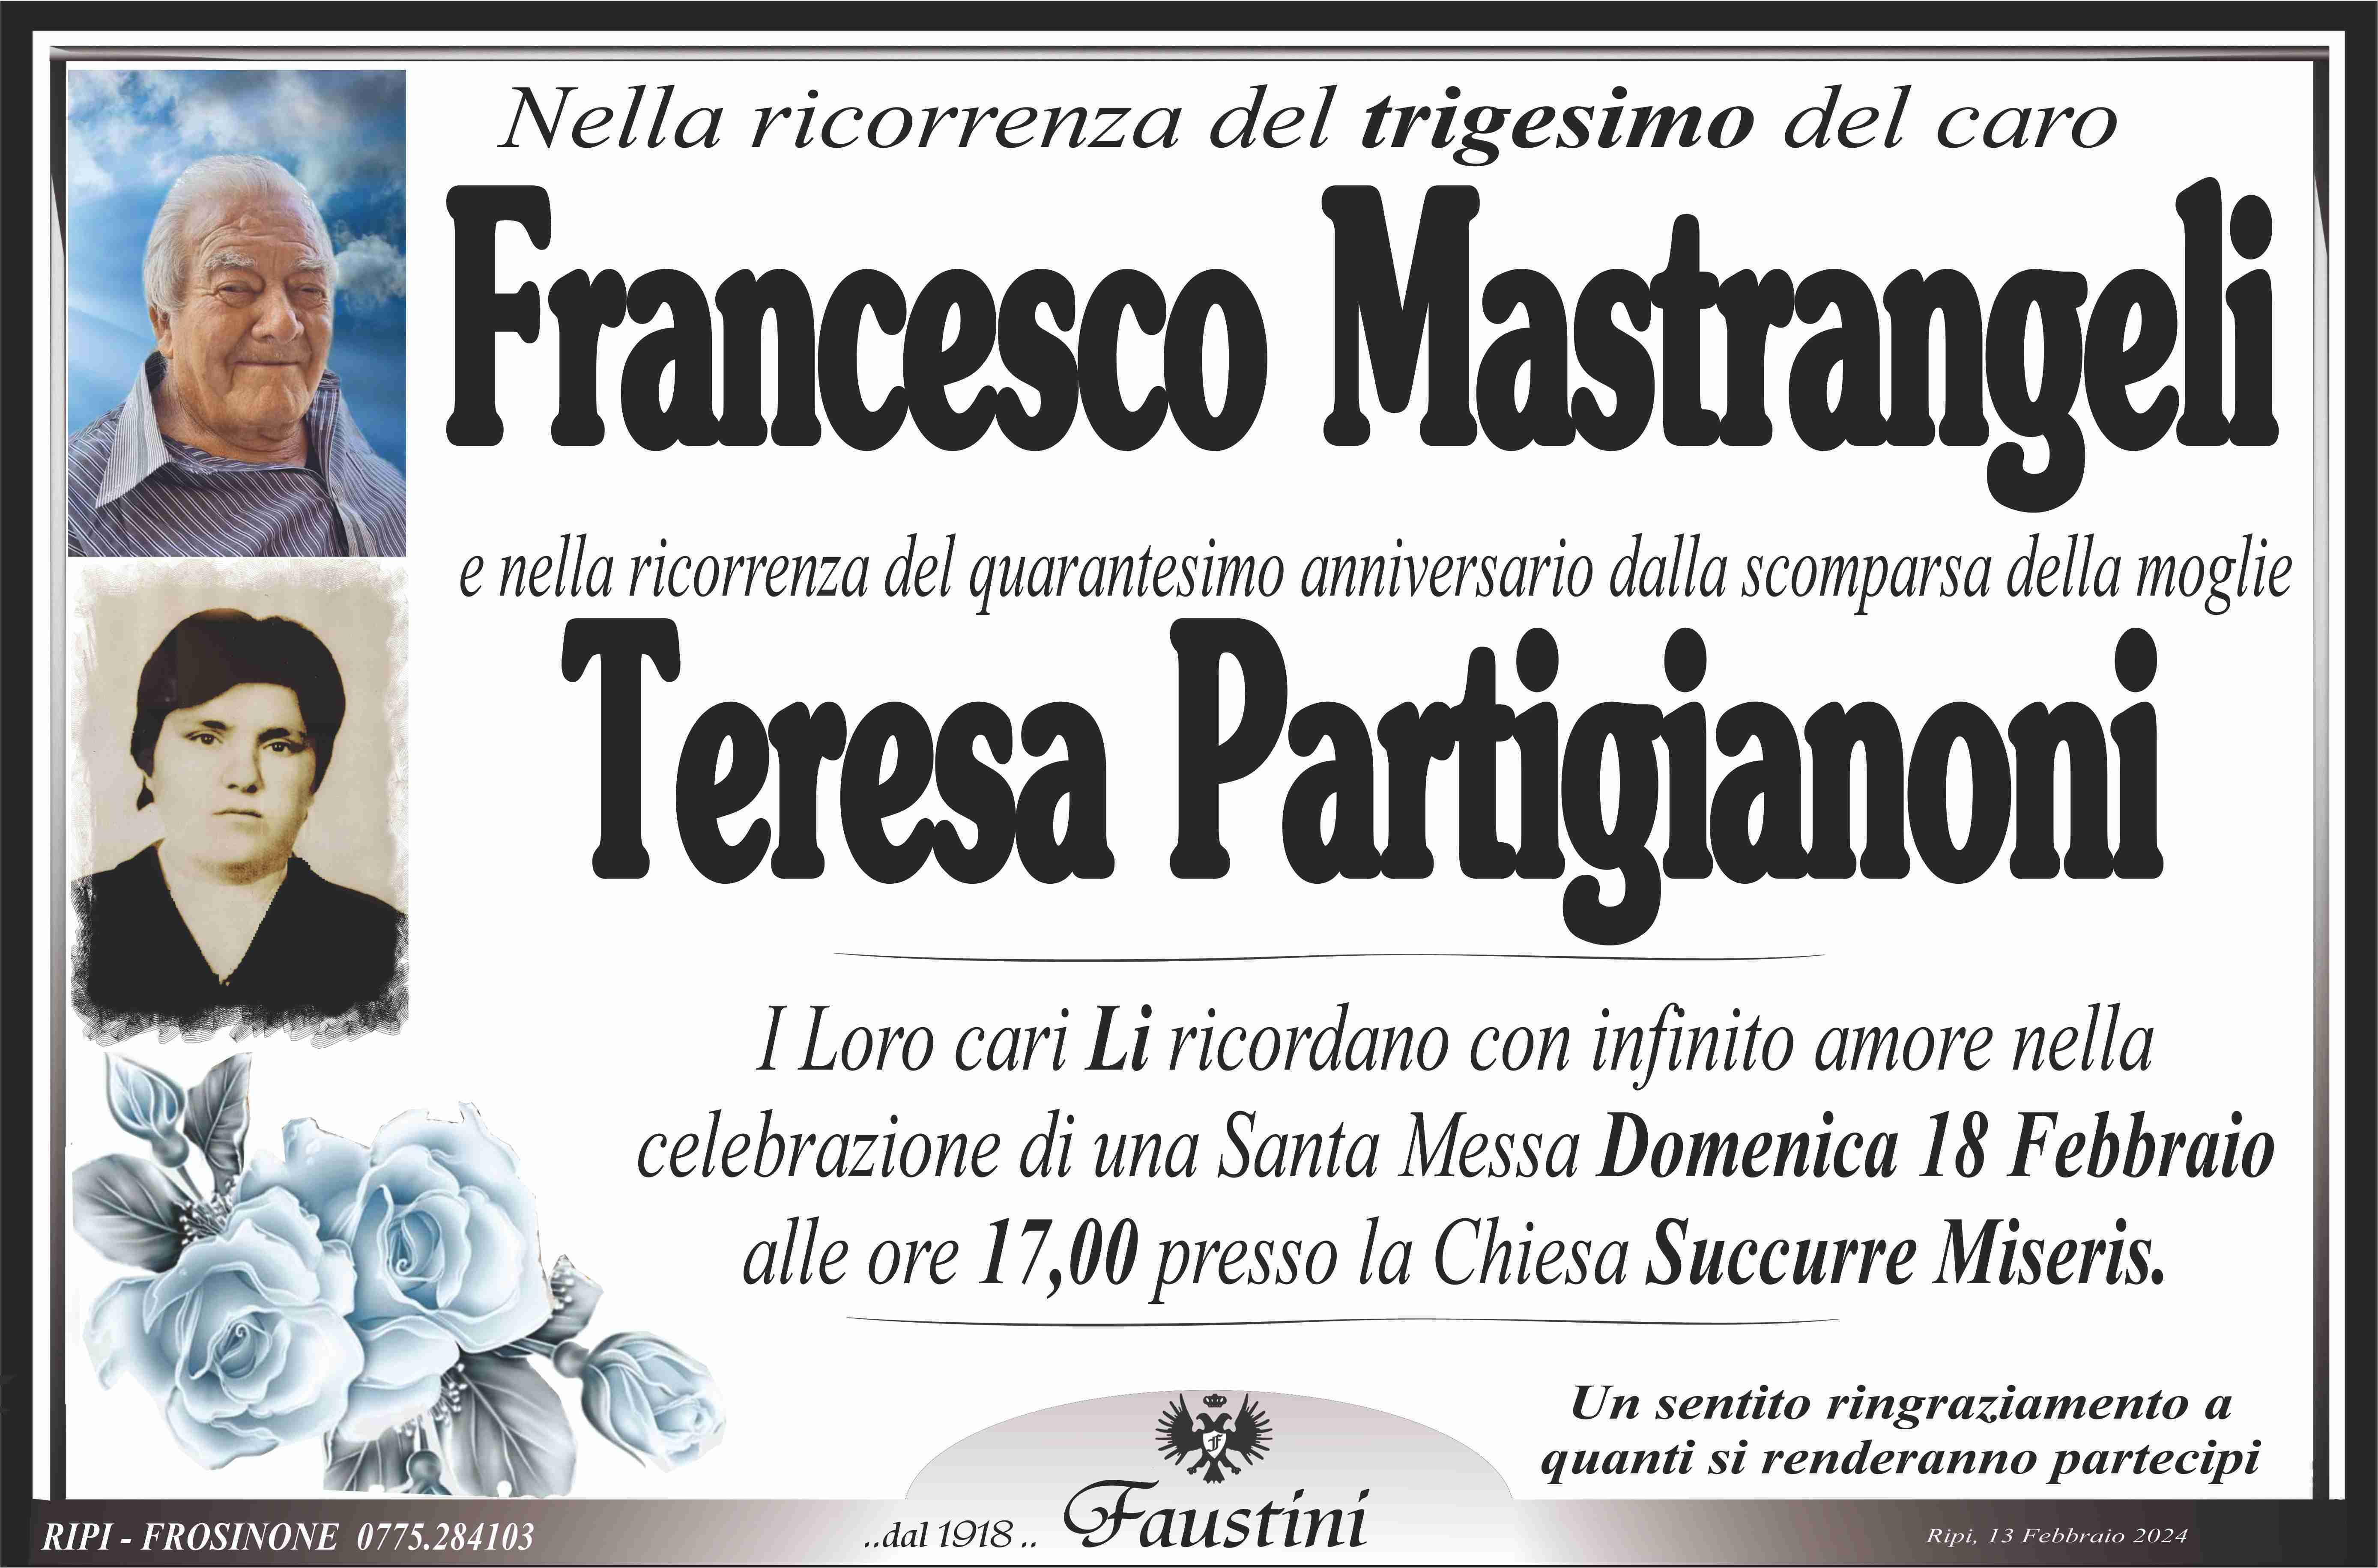 Francesco Mastrangeli - Teresa Partigianoni